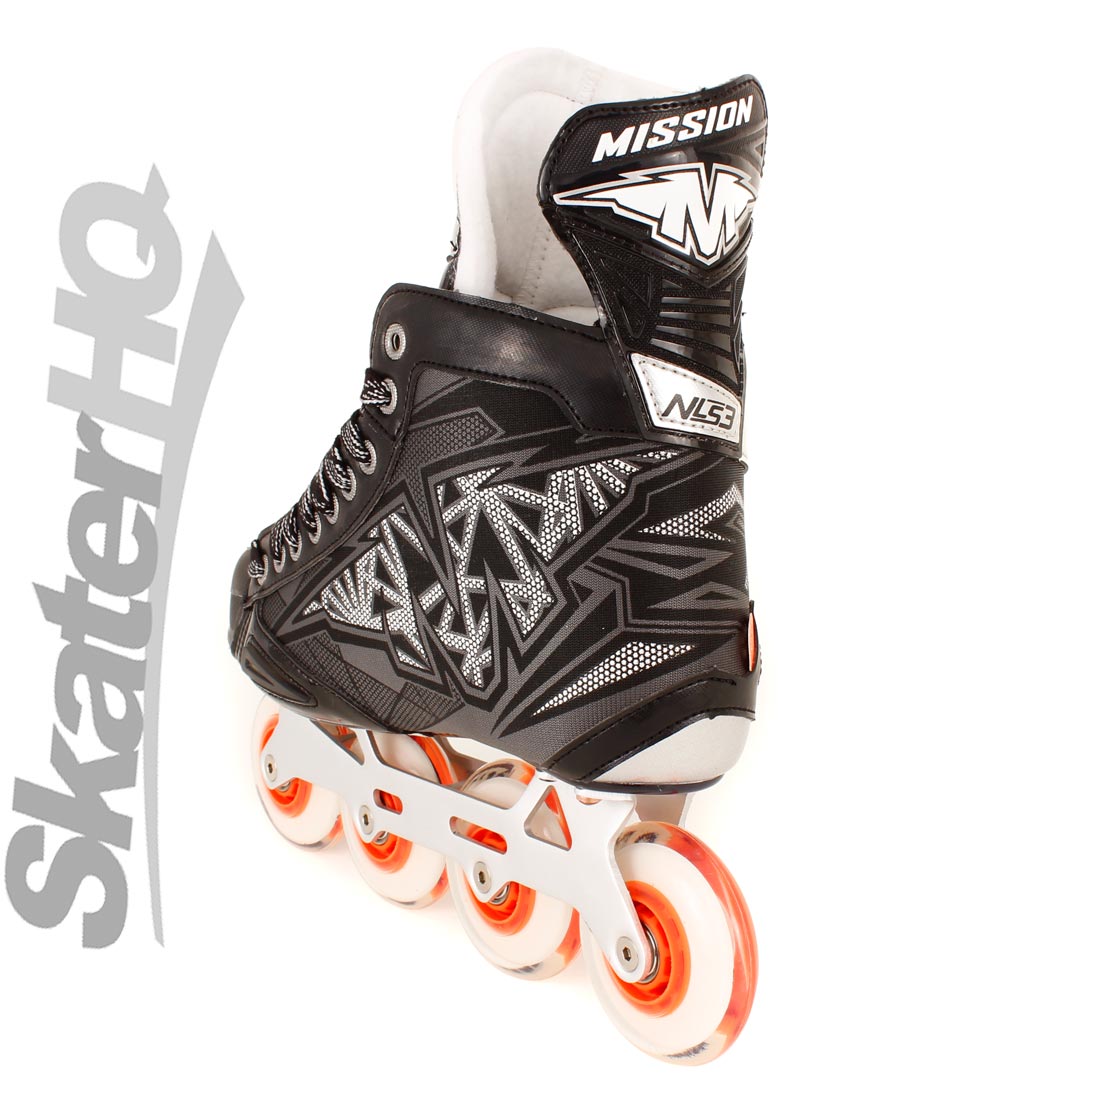 Mission Inhaler NLS3 Skate - 6US Inline Hockey Skates